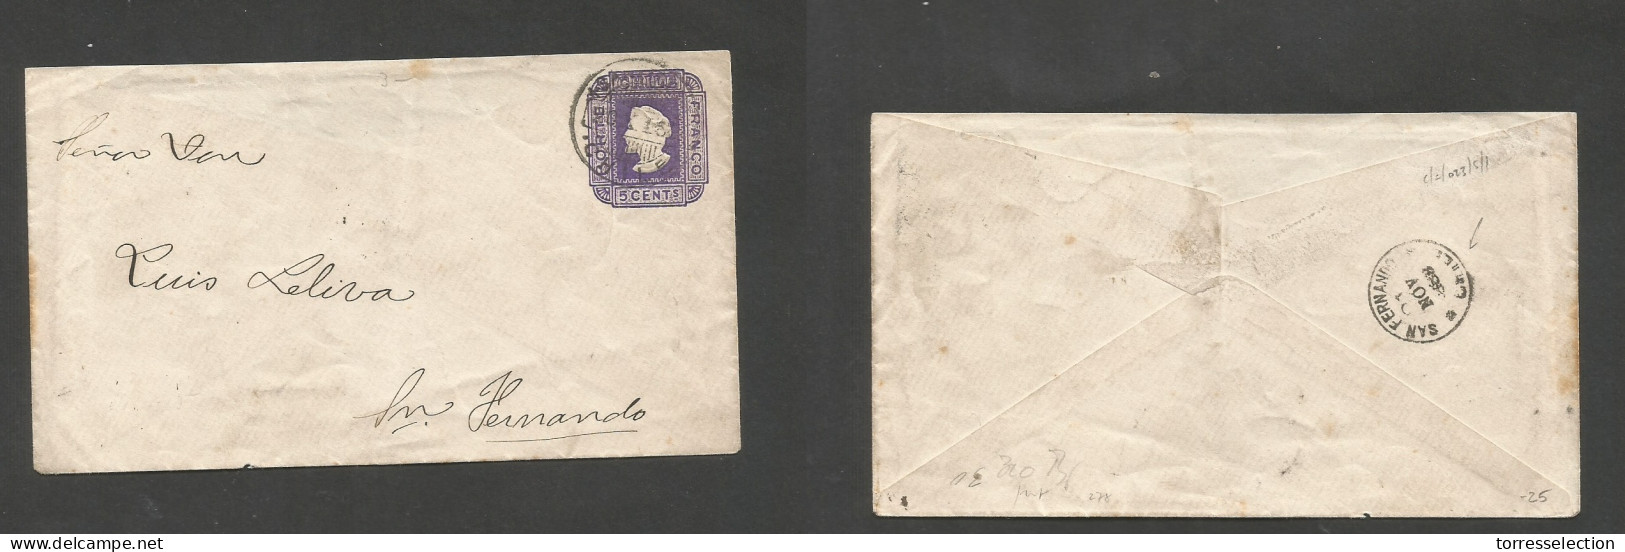 CHILE - Stationery. 1889 (20 Nov) Stgo - San Fernando (24 Nov) 5c Purple Stat Envelope, Paper With Watermark Lines At 20 - Cile